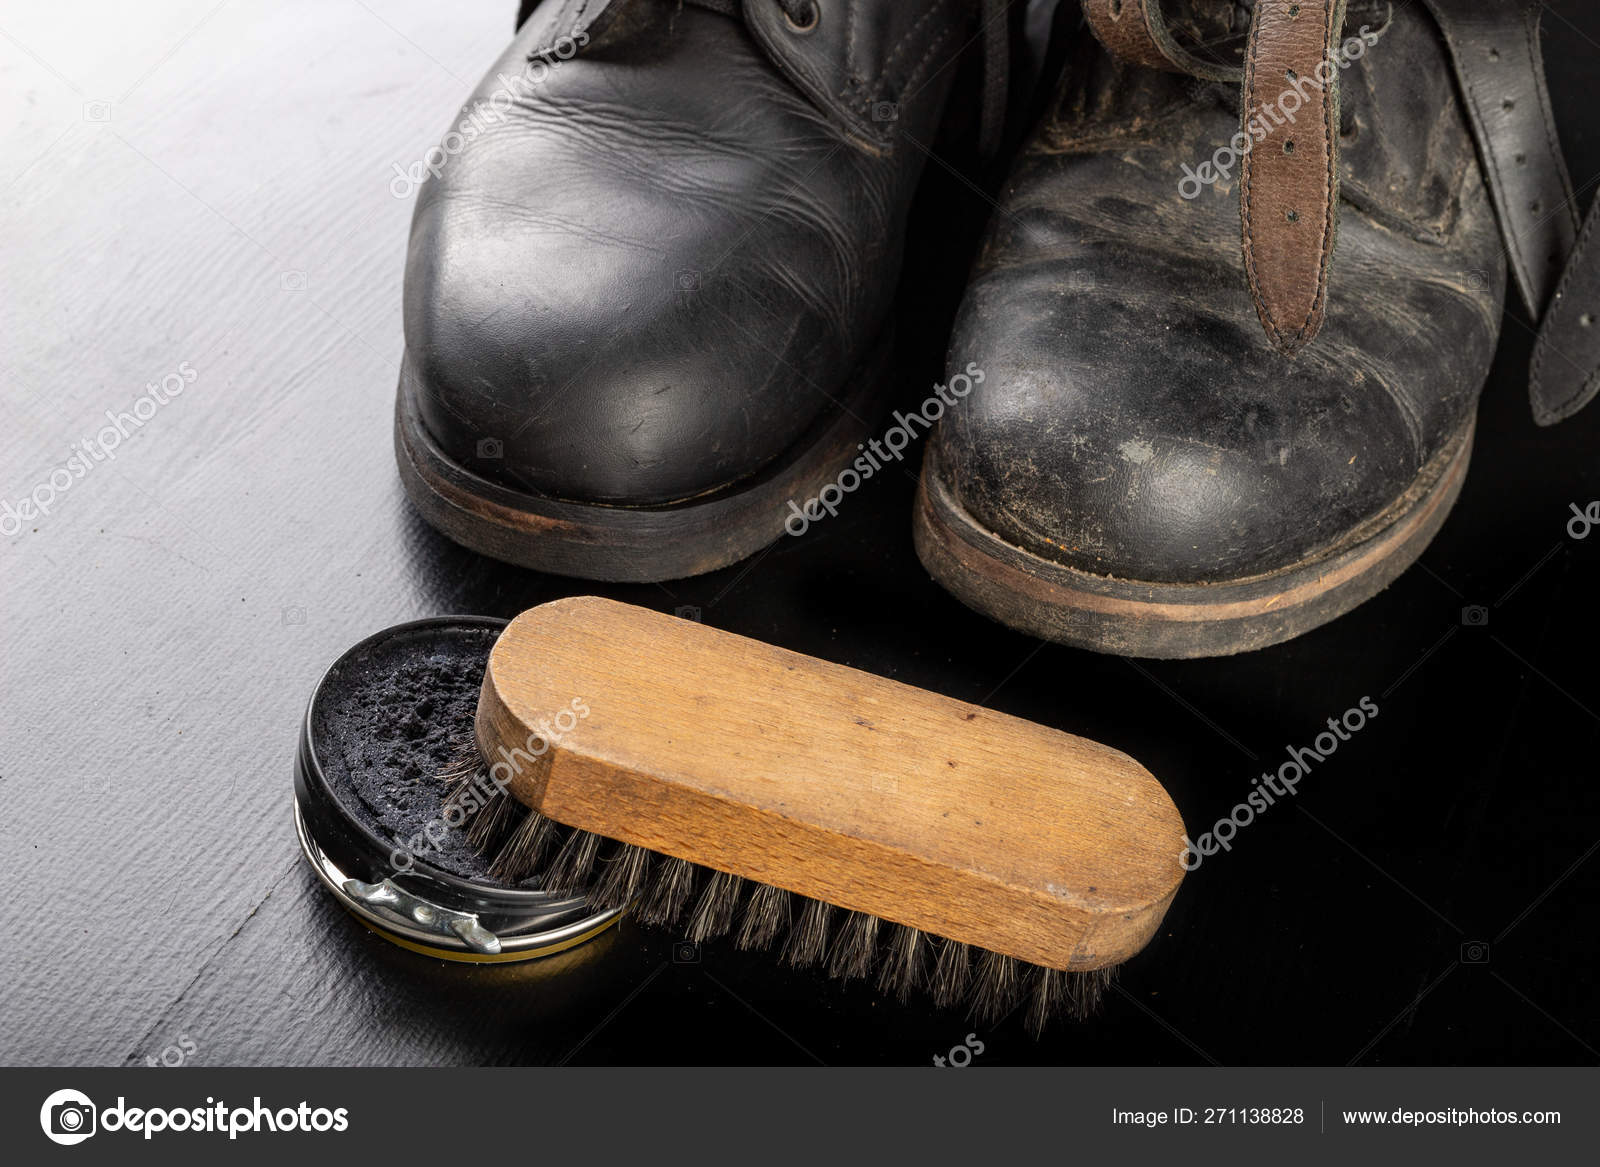 military shoe polish